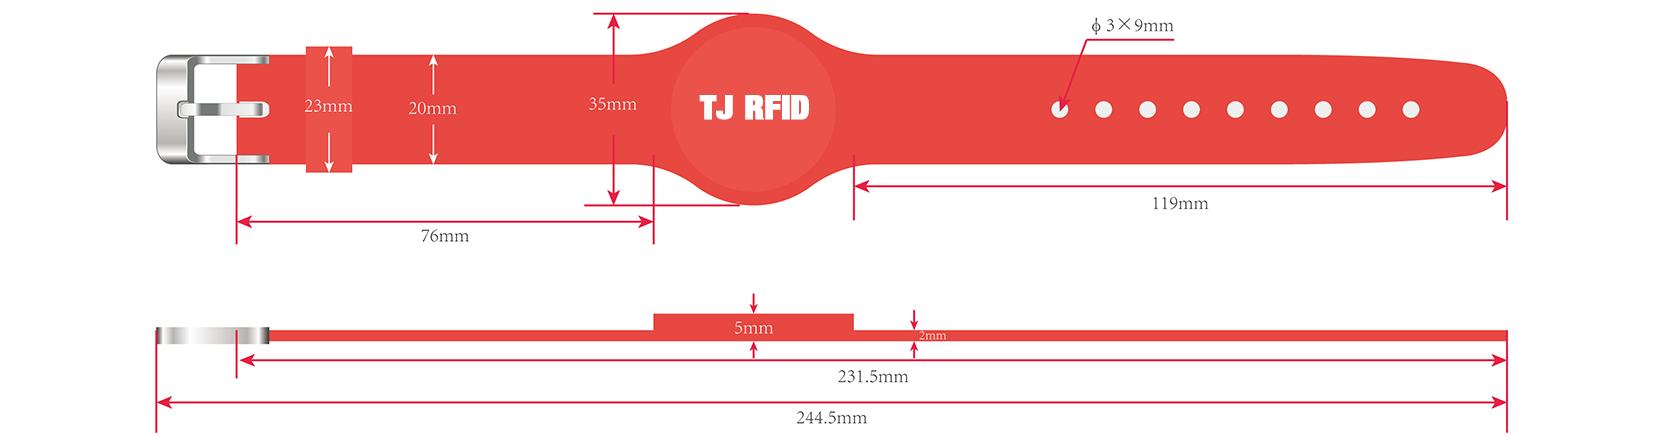 TRSB02-003 rfid silicone wristband size